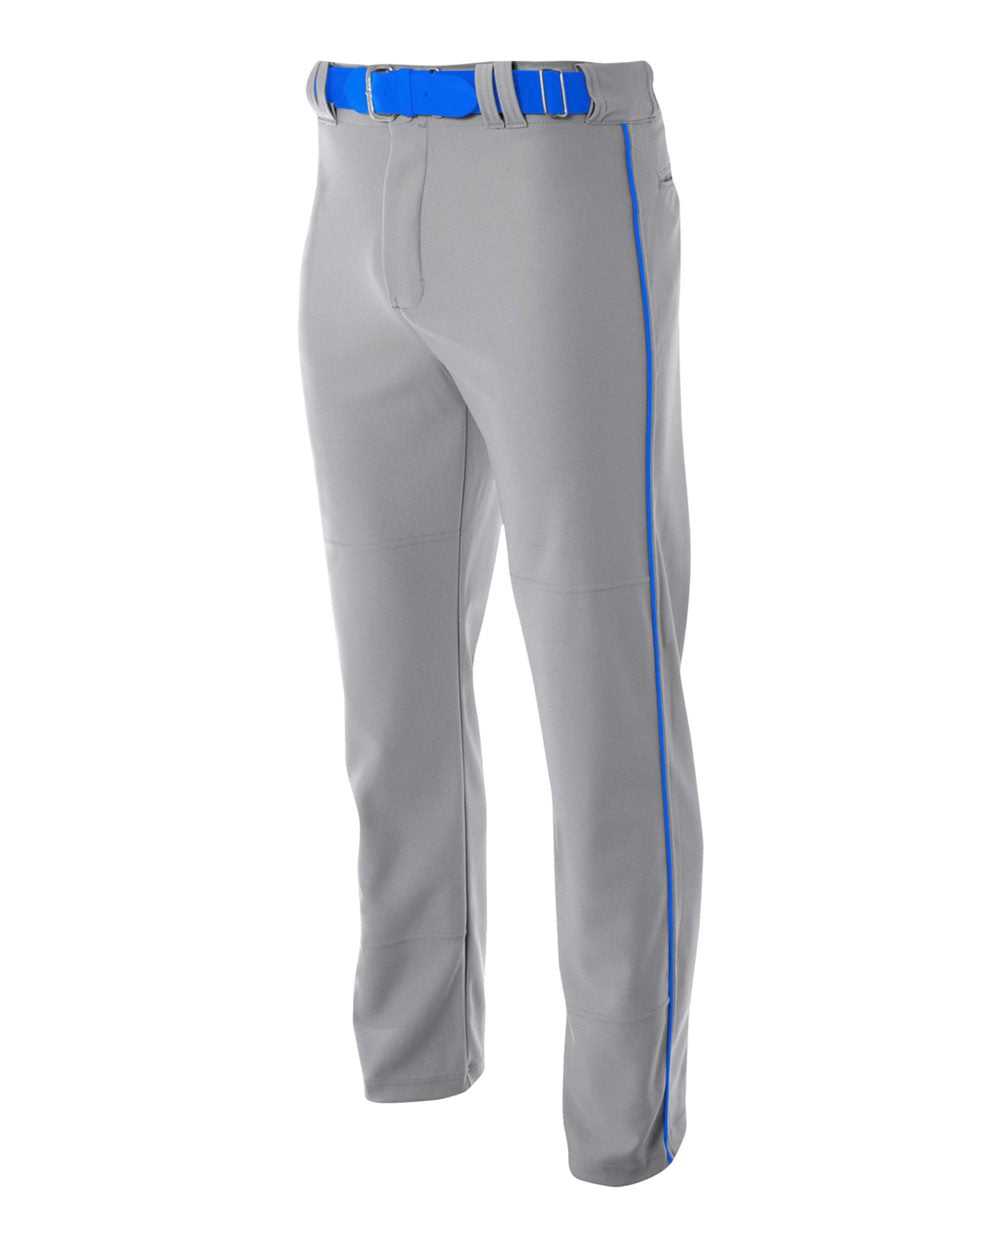 A4 N6162 Pro Style Open Bottom Baggy Cut Baseball Pant - Gray Royal - HIT a Double